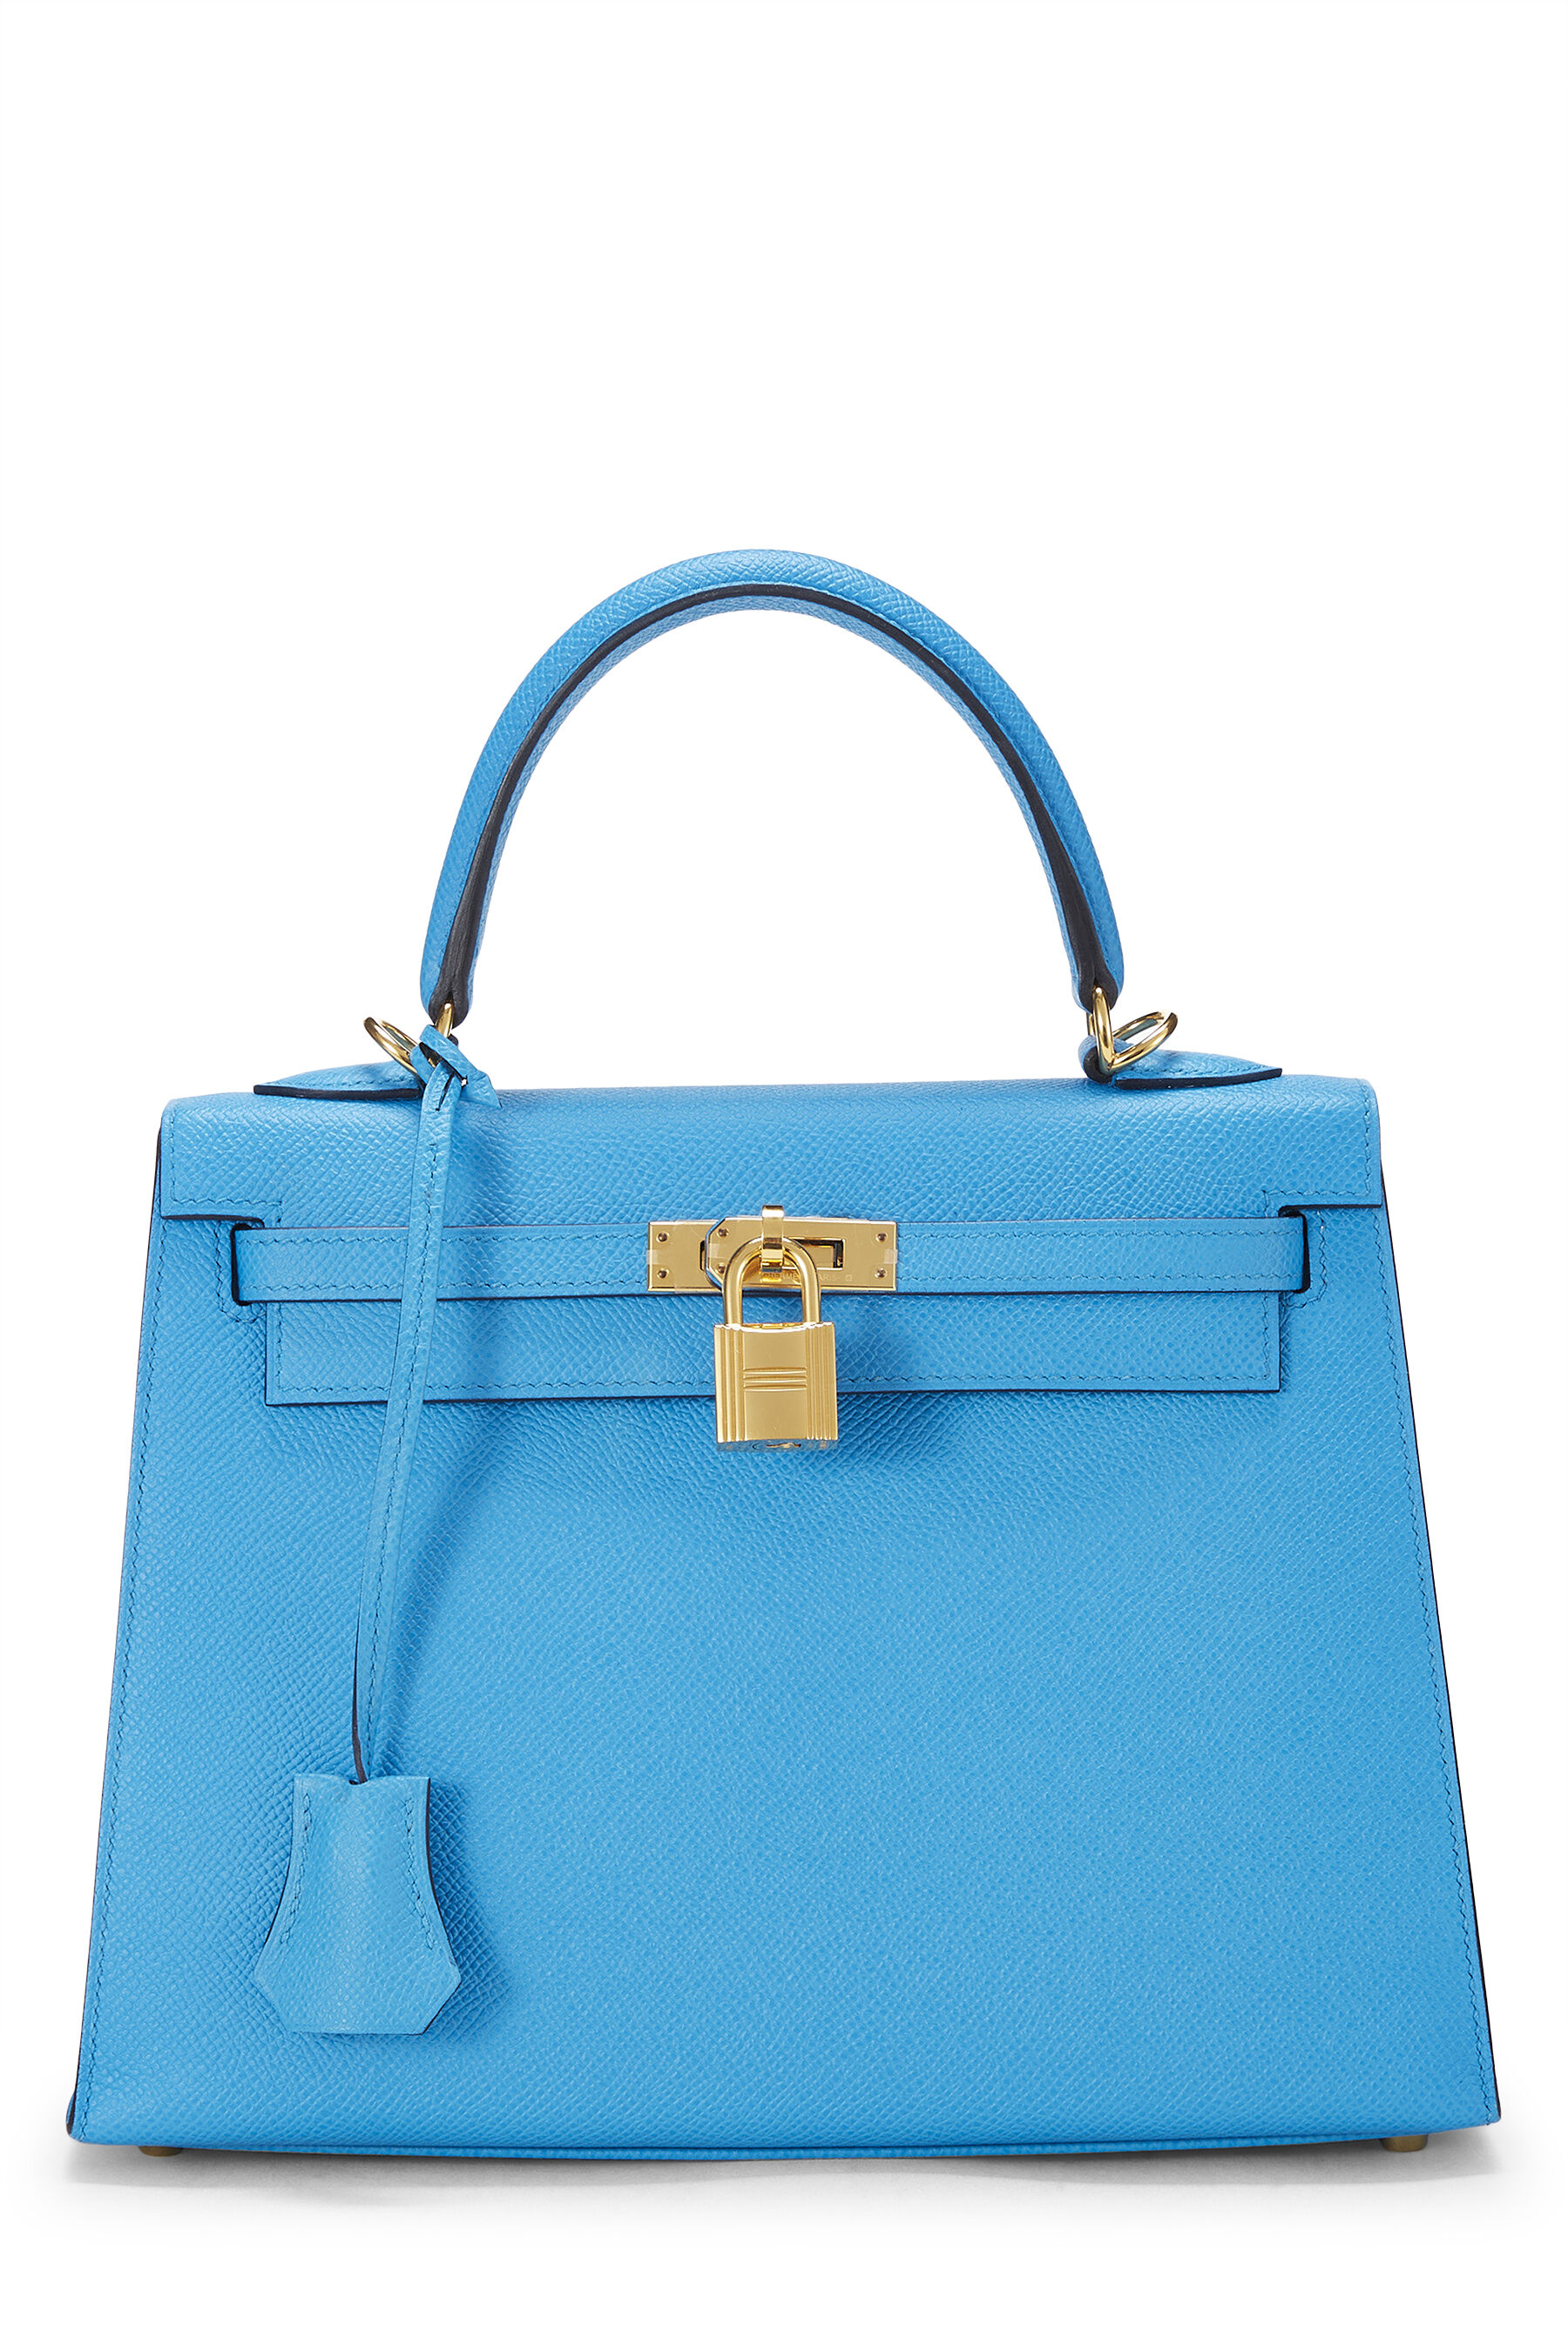 Hermès - Blue Frida Epsom Kelly Sellier 25